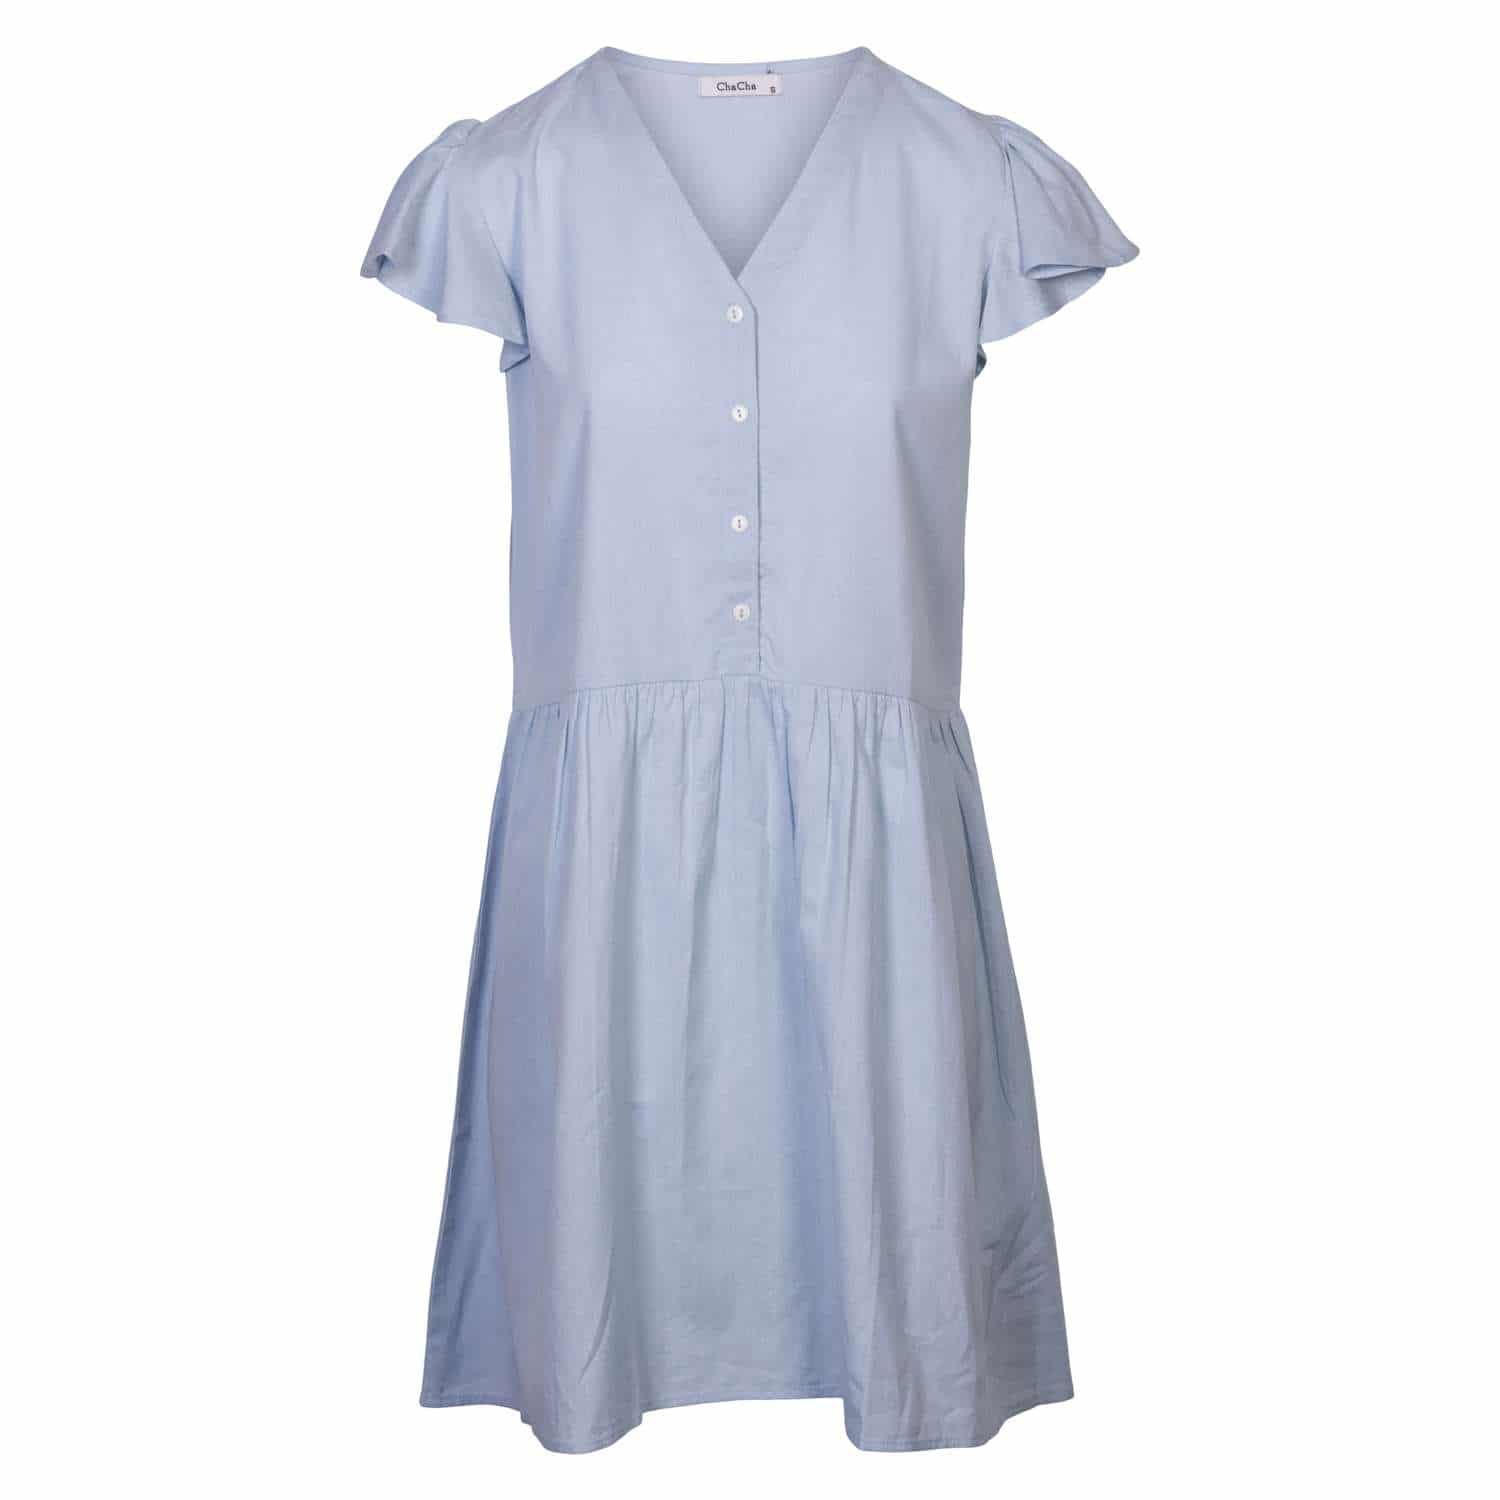 ZbyZ - plus size kjole m. - - Str. 46/48 - Lyseblå kjole